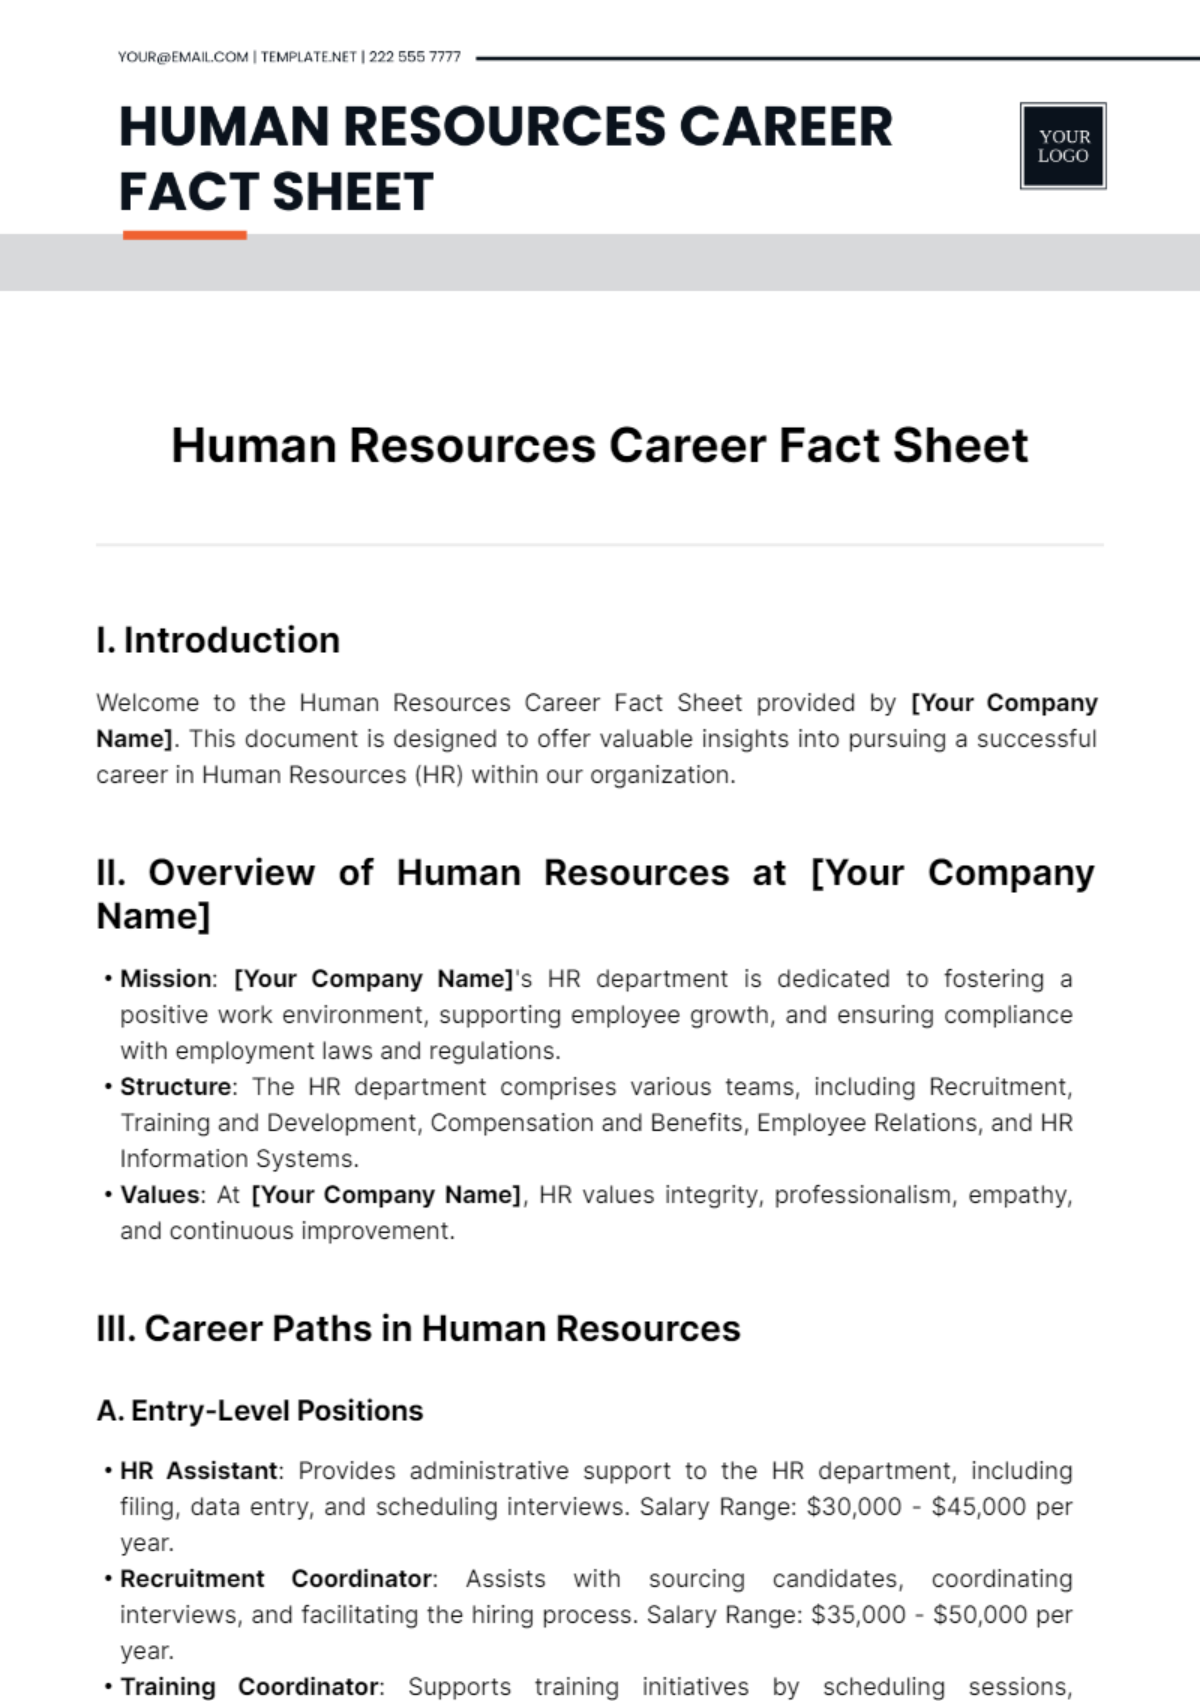 Free Human Resources Career Fact Sheet Template